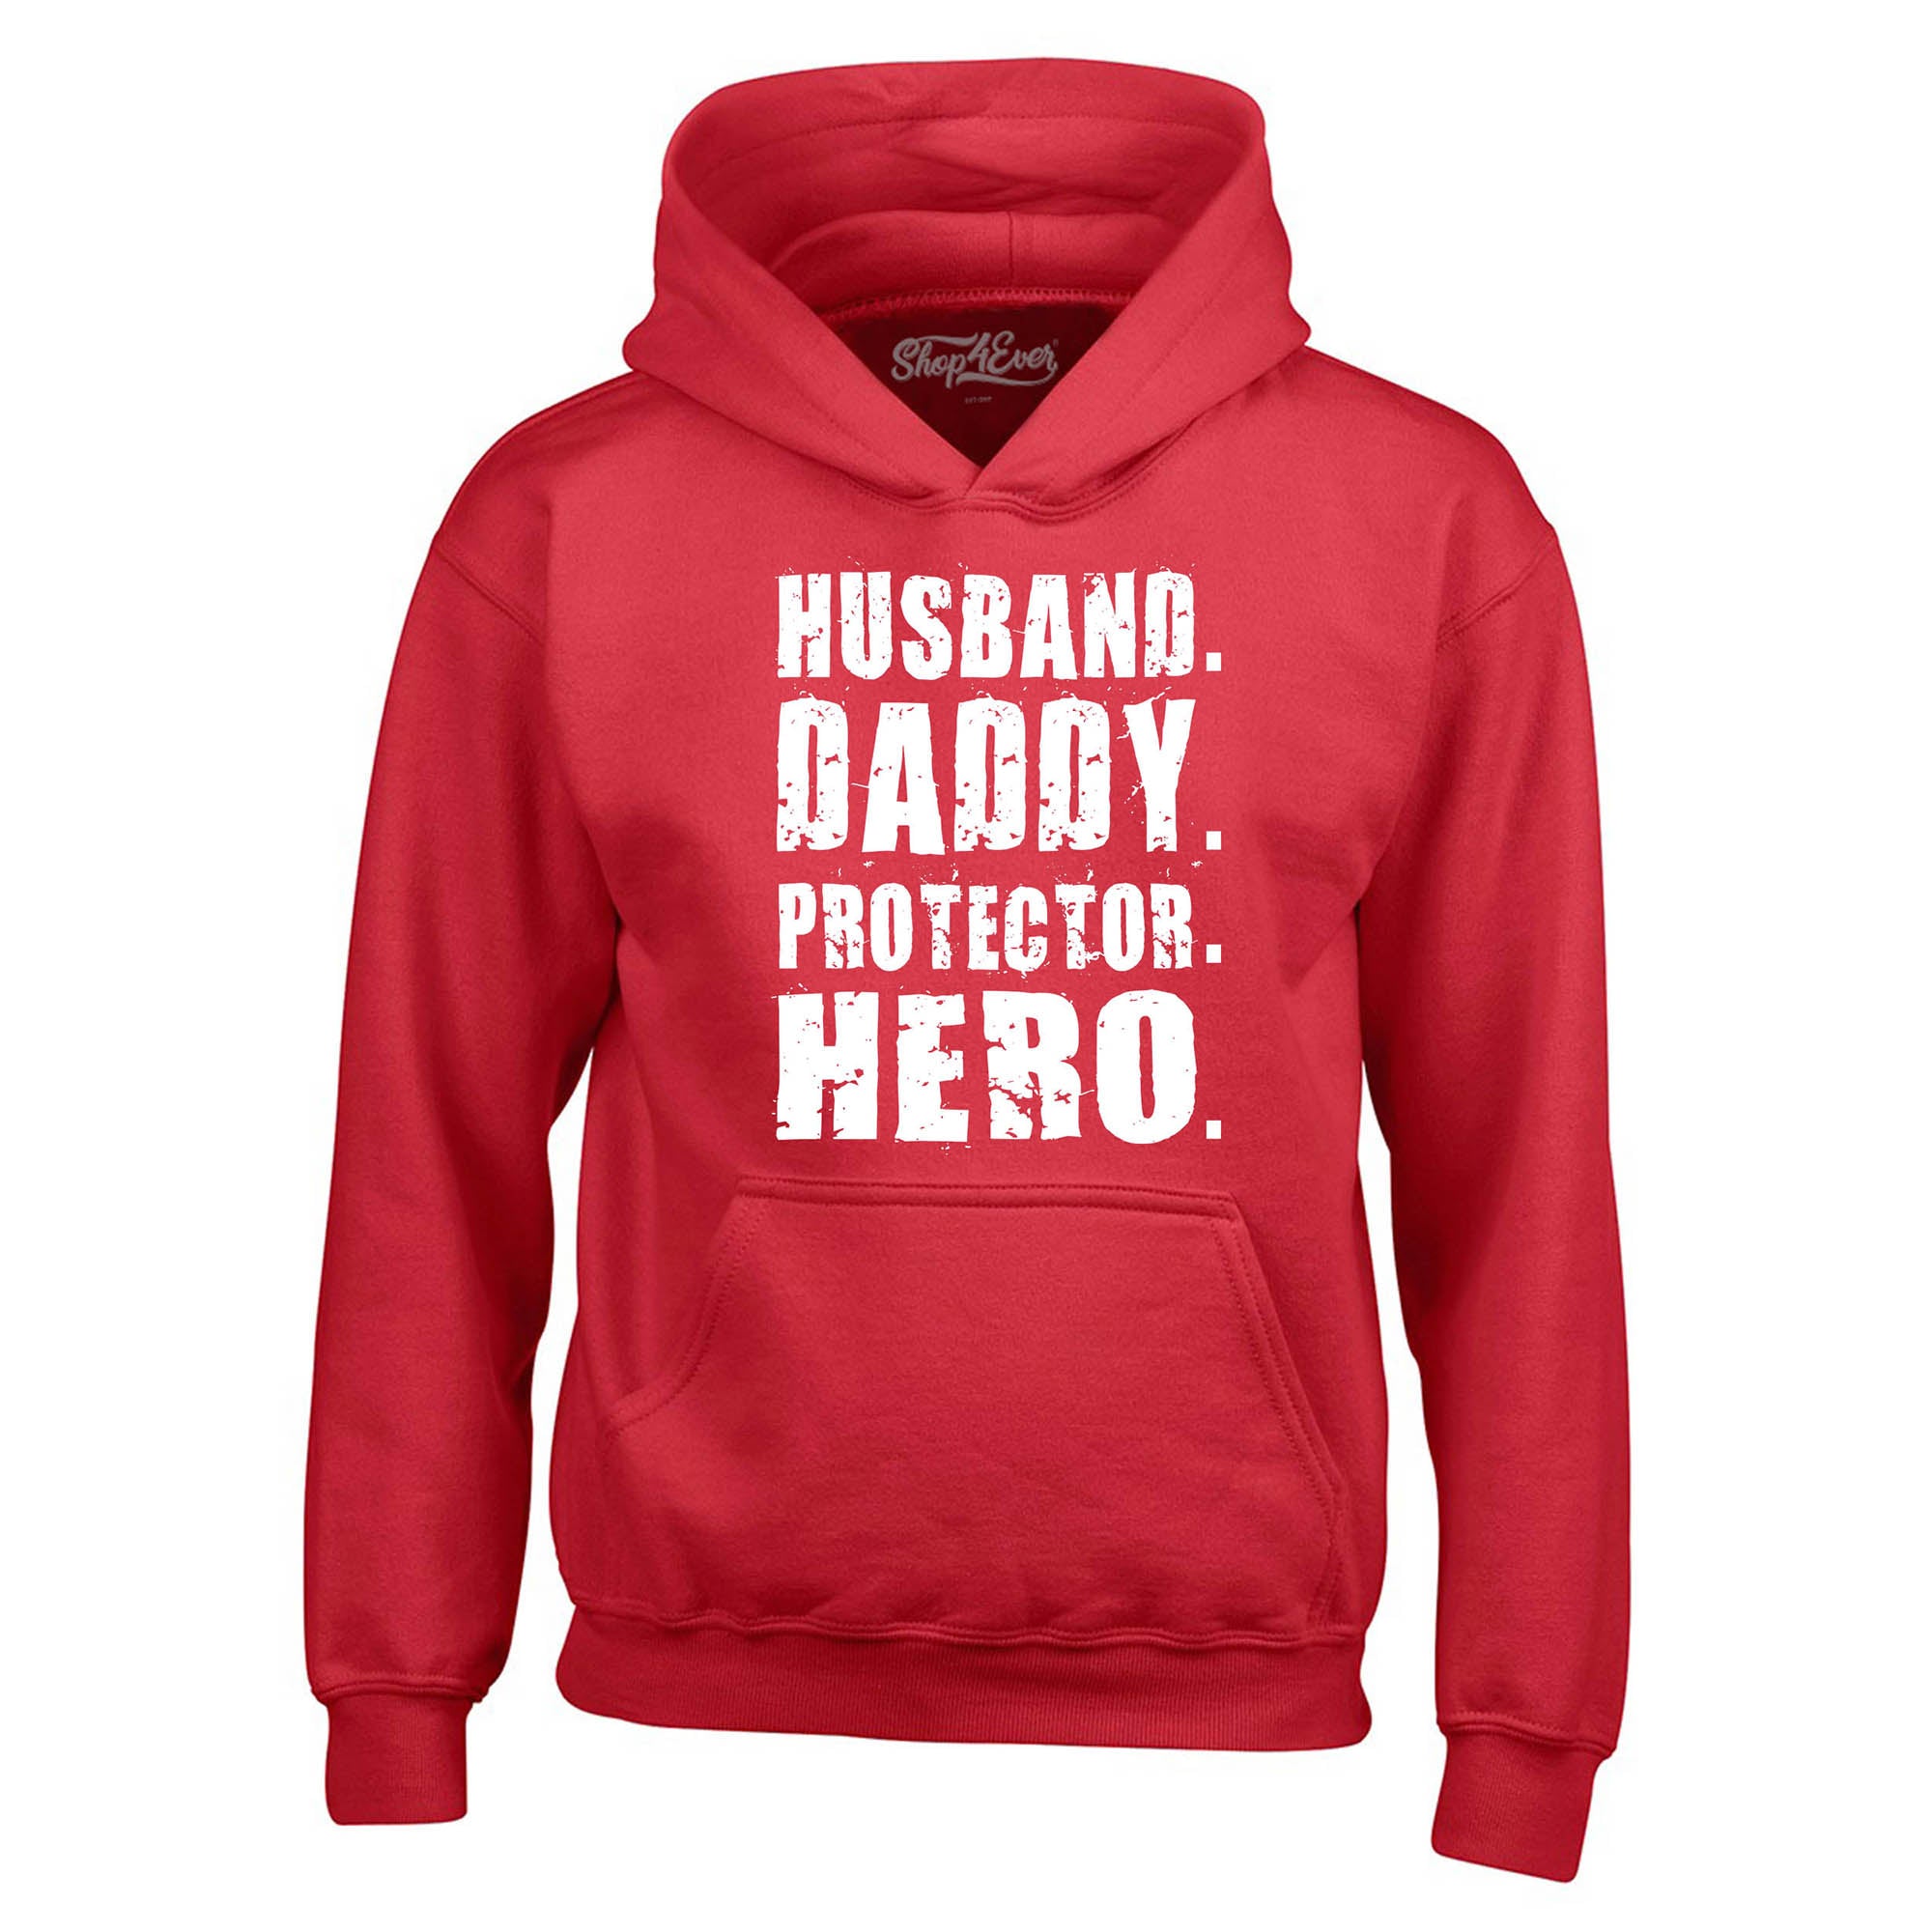 Husband. Daddy. Protector. Hero. Hoodie Sweatshirts